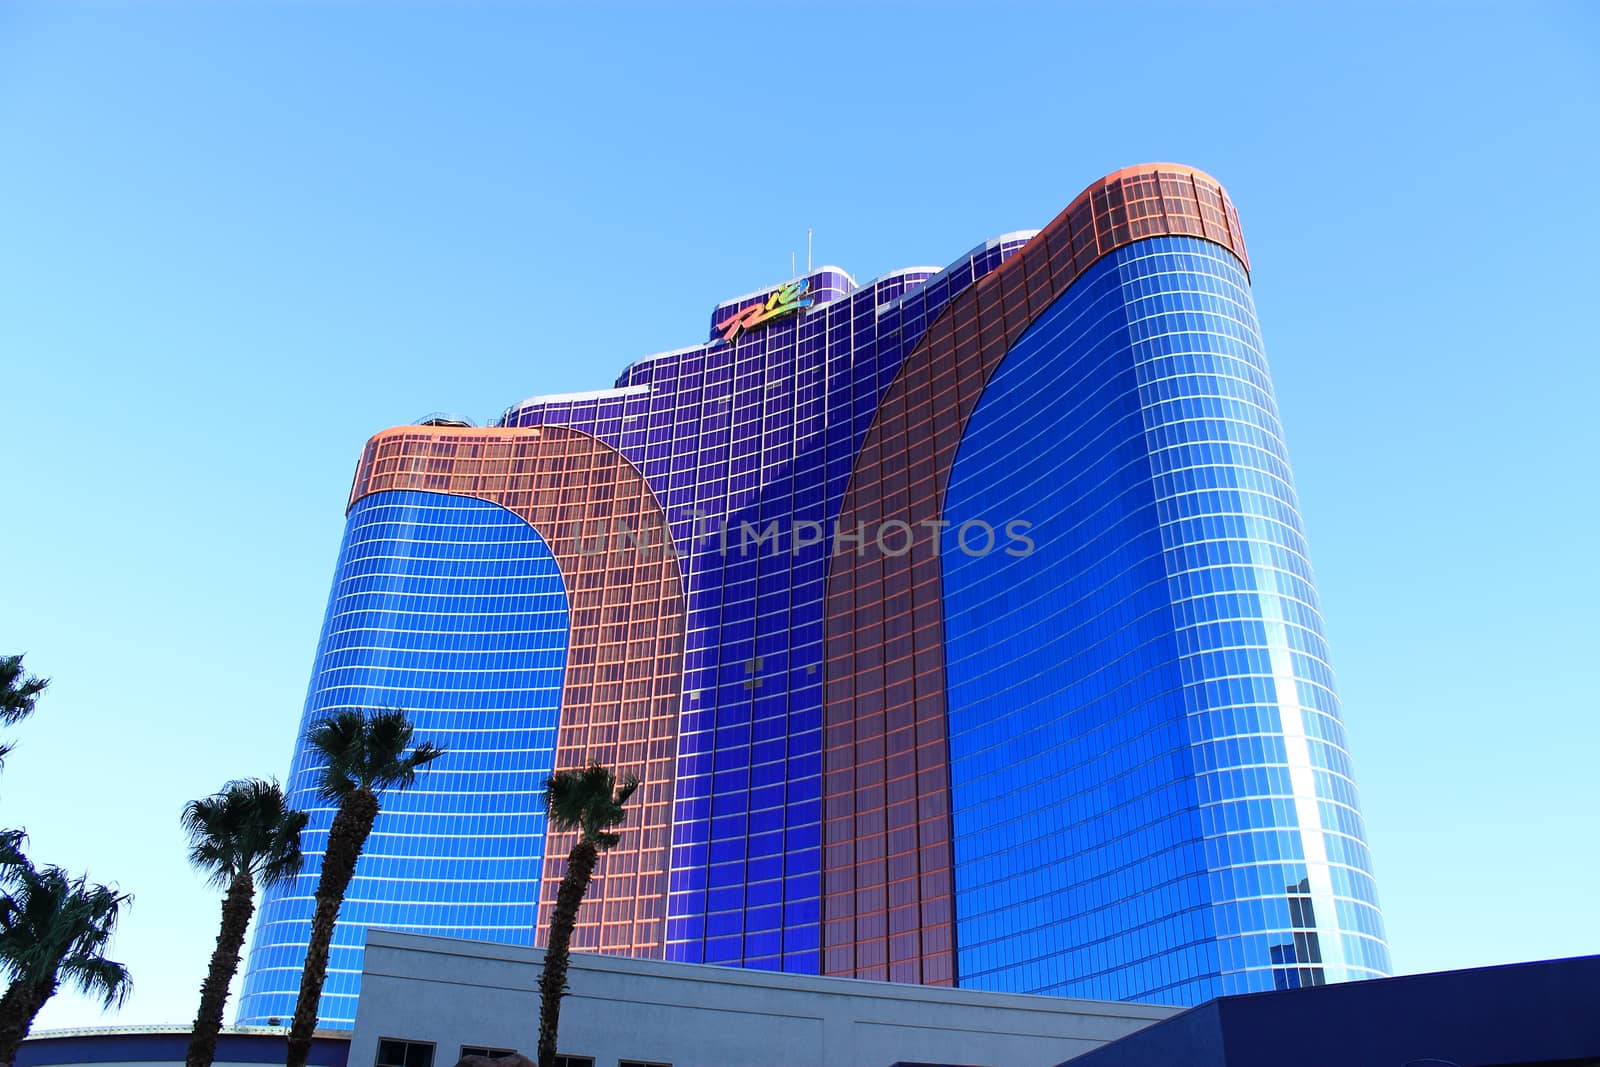 Rio All Suite Hotel and Casino near the Las Vegas Strip